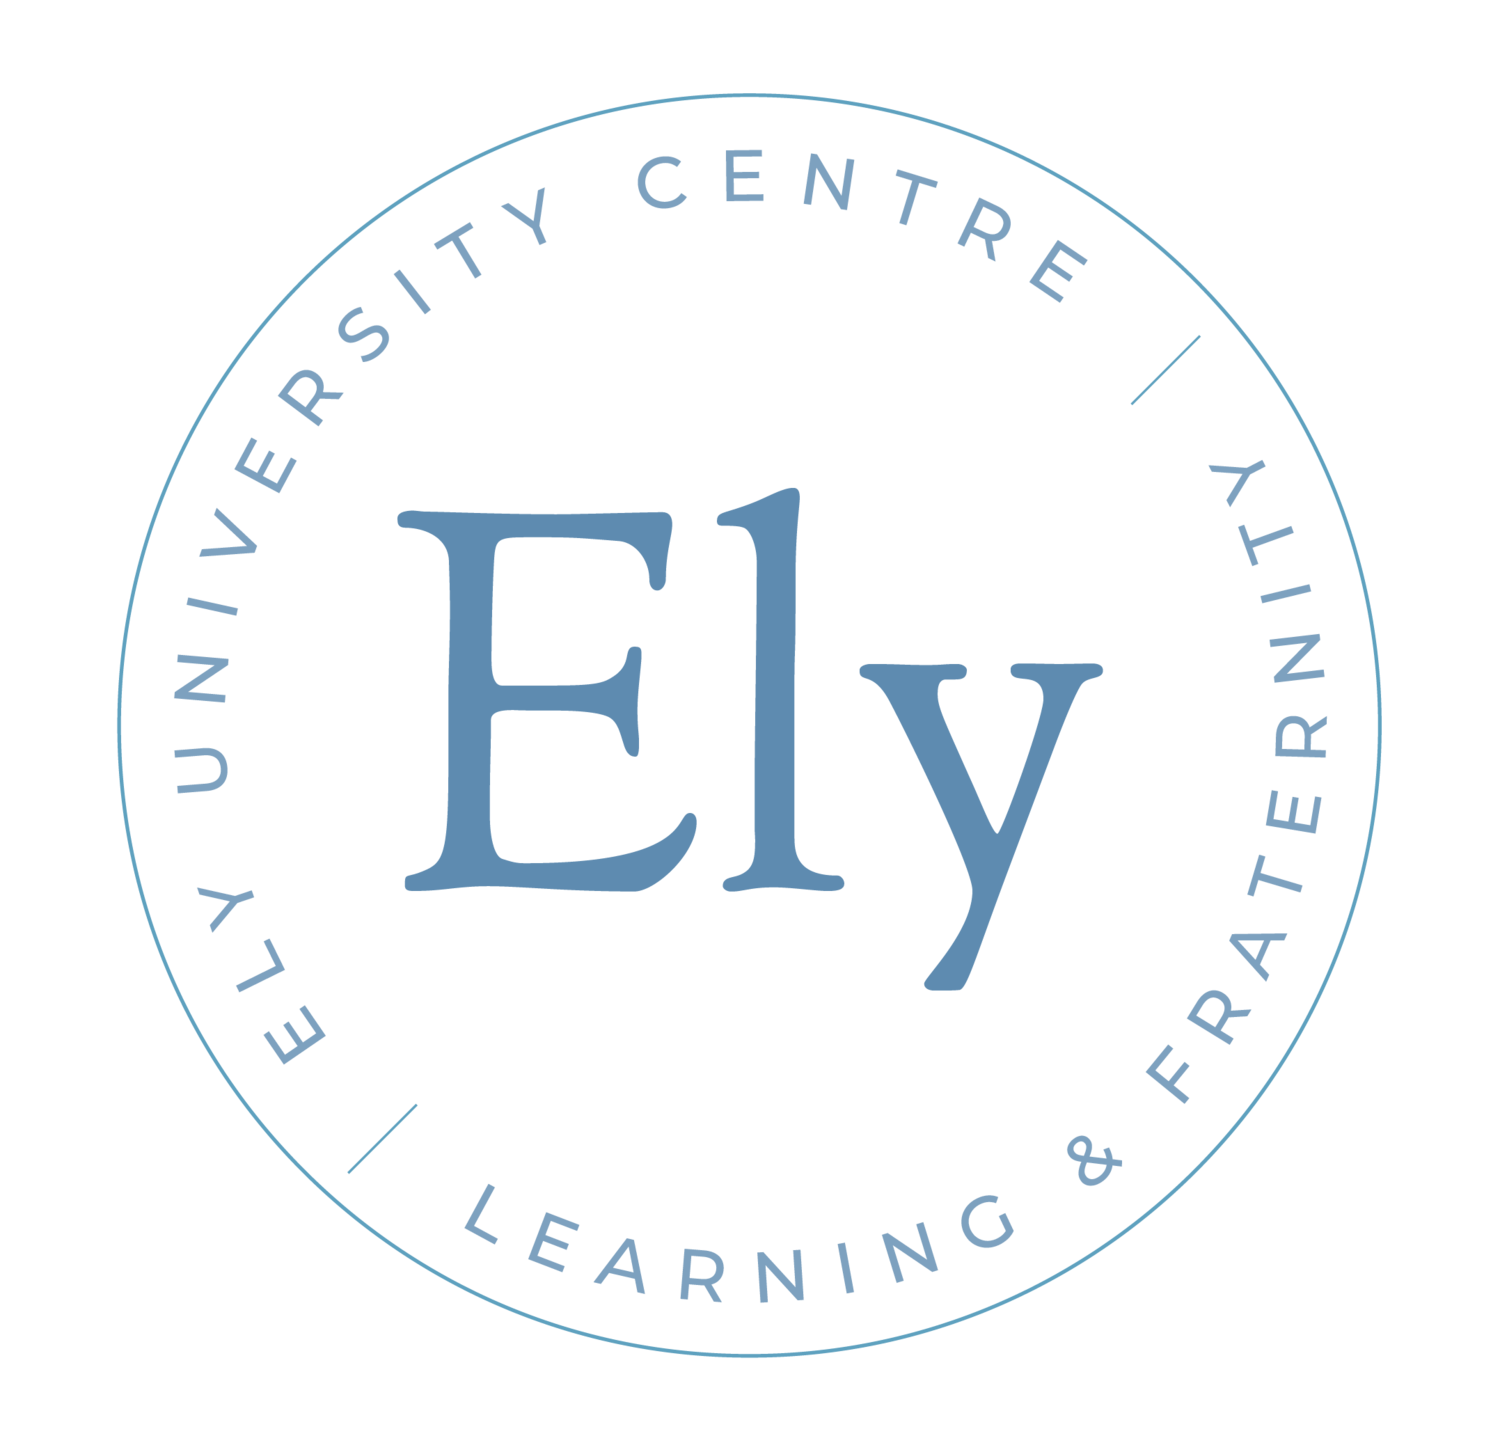 Ely University Centre